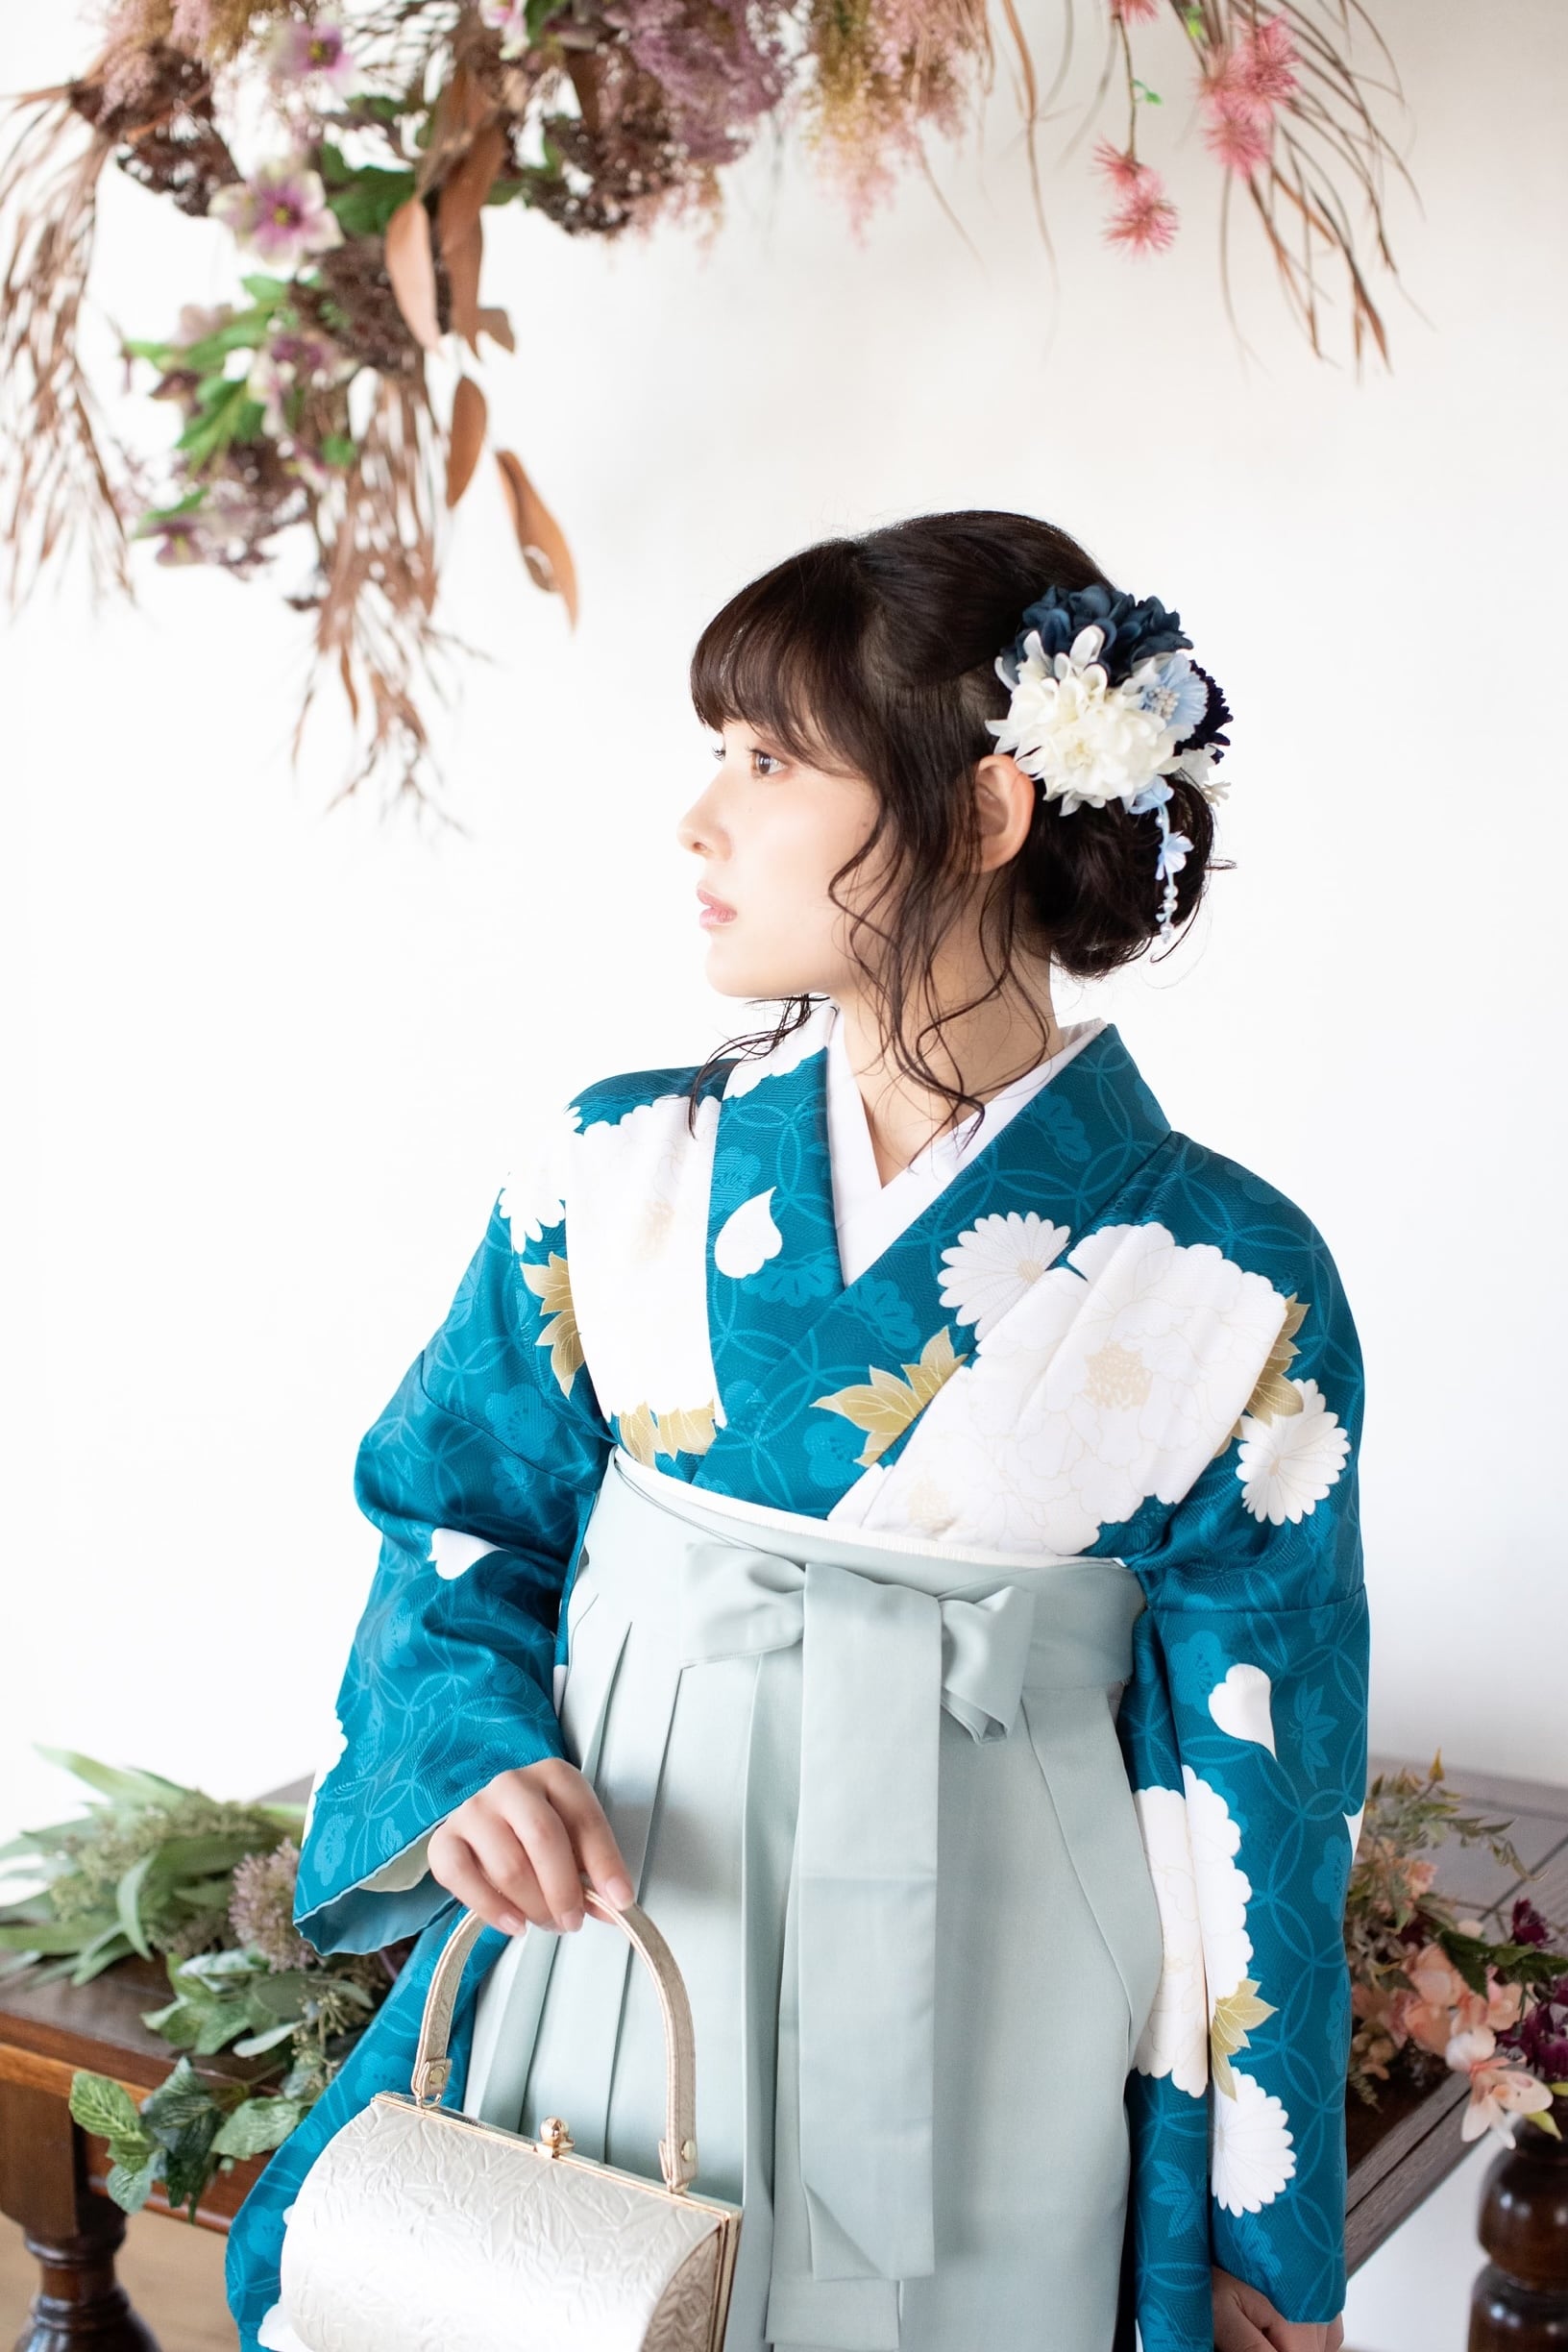 Kimono Sienne 卒業式袴3点セット 牡丹や七宝 二尺袖着物 袴 ブルー